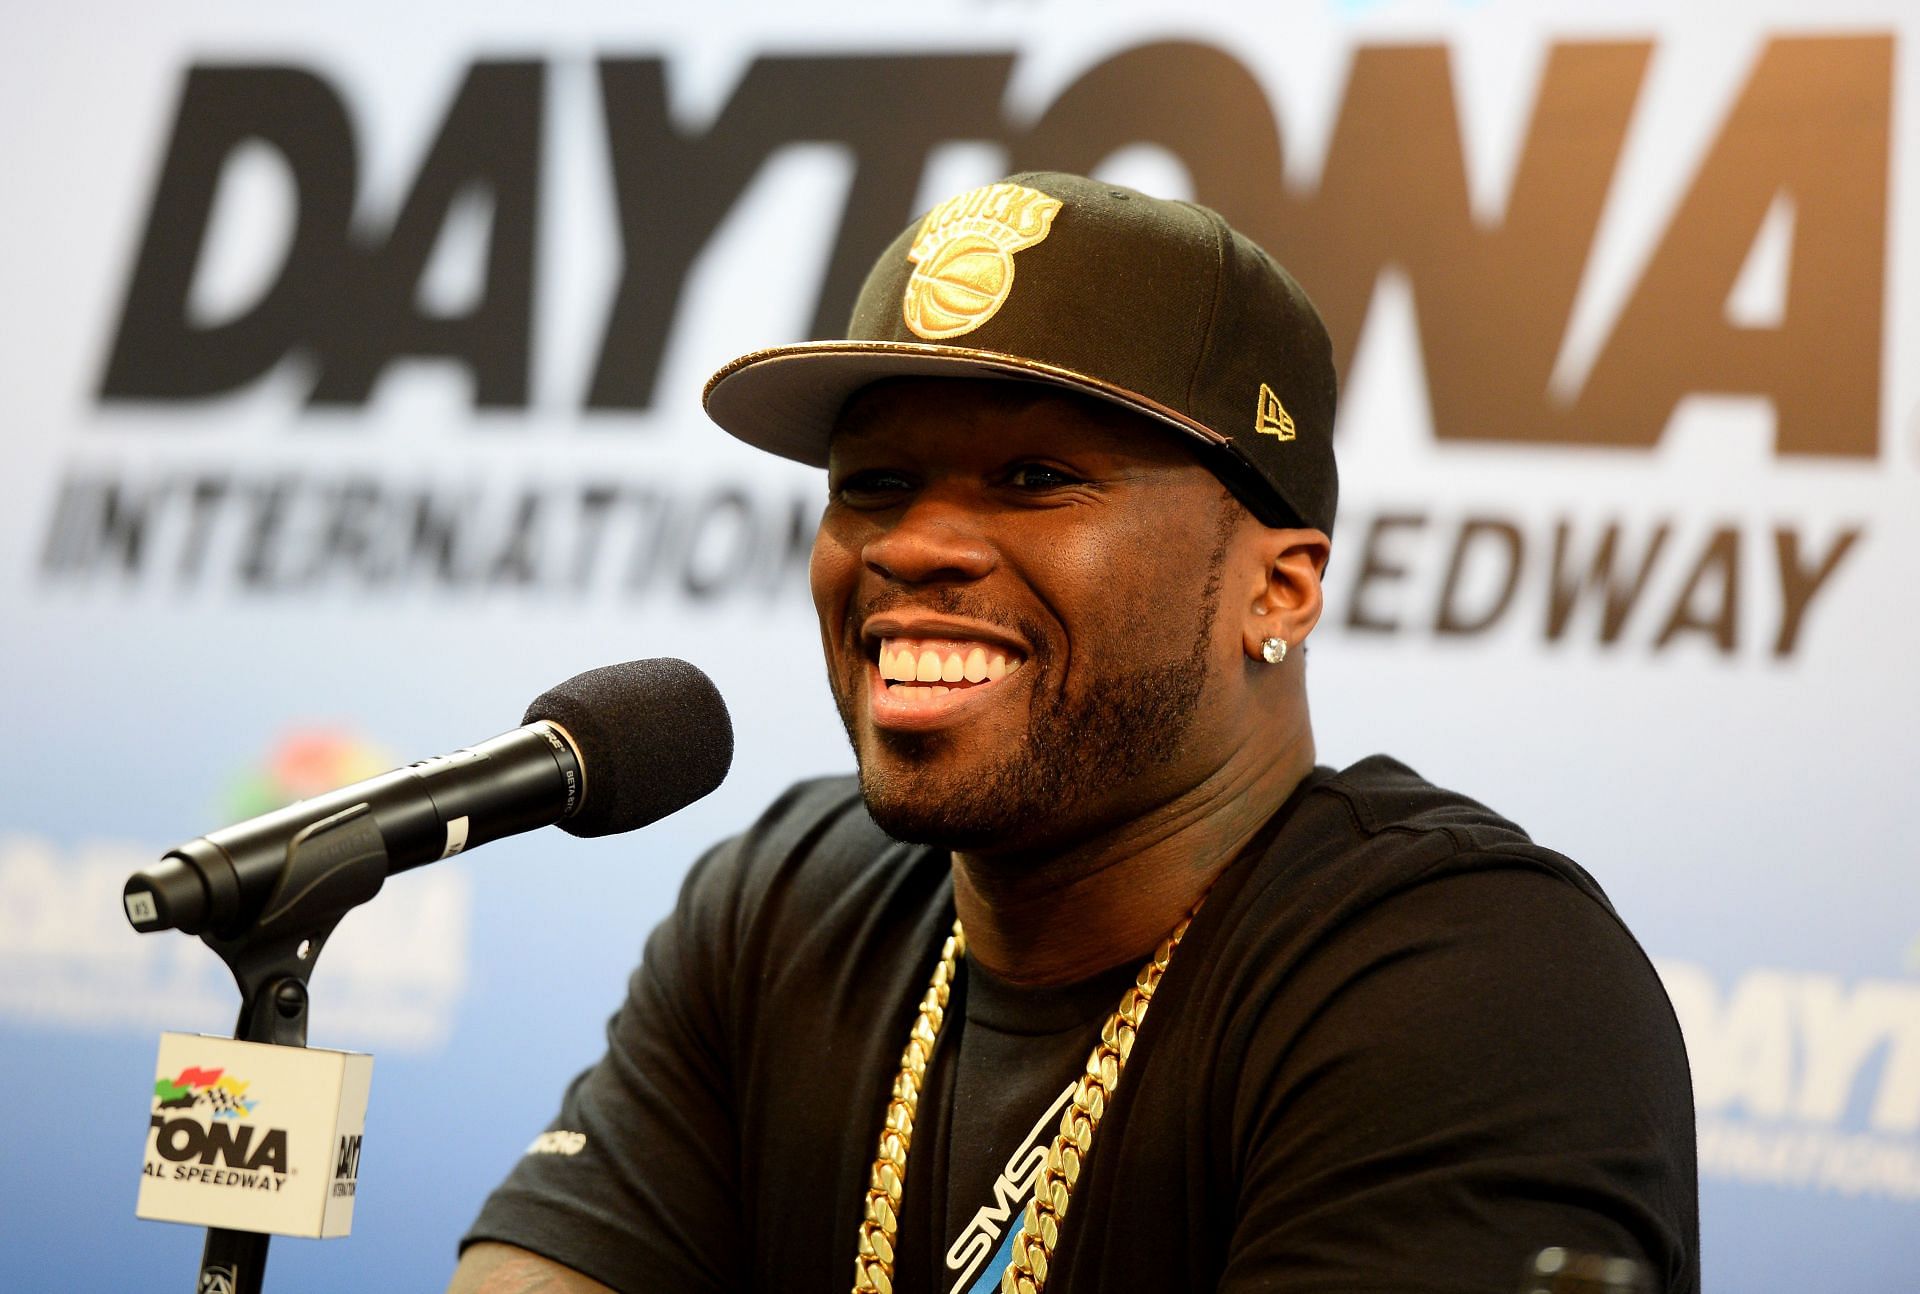 50 Cent at Daytona 500 - Practice